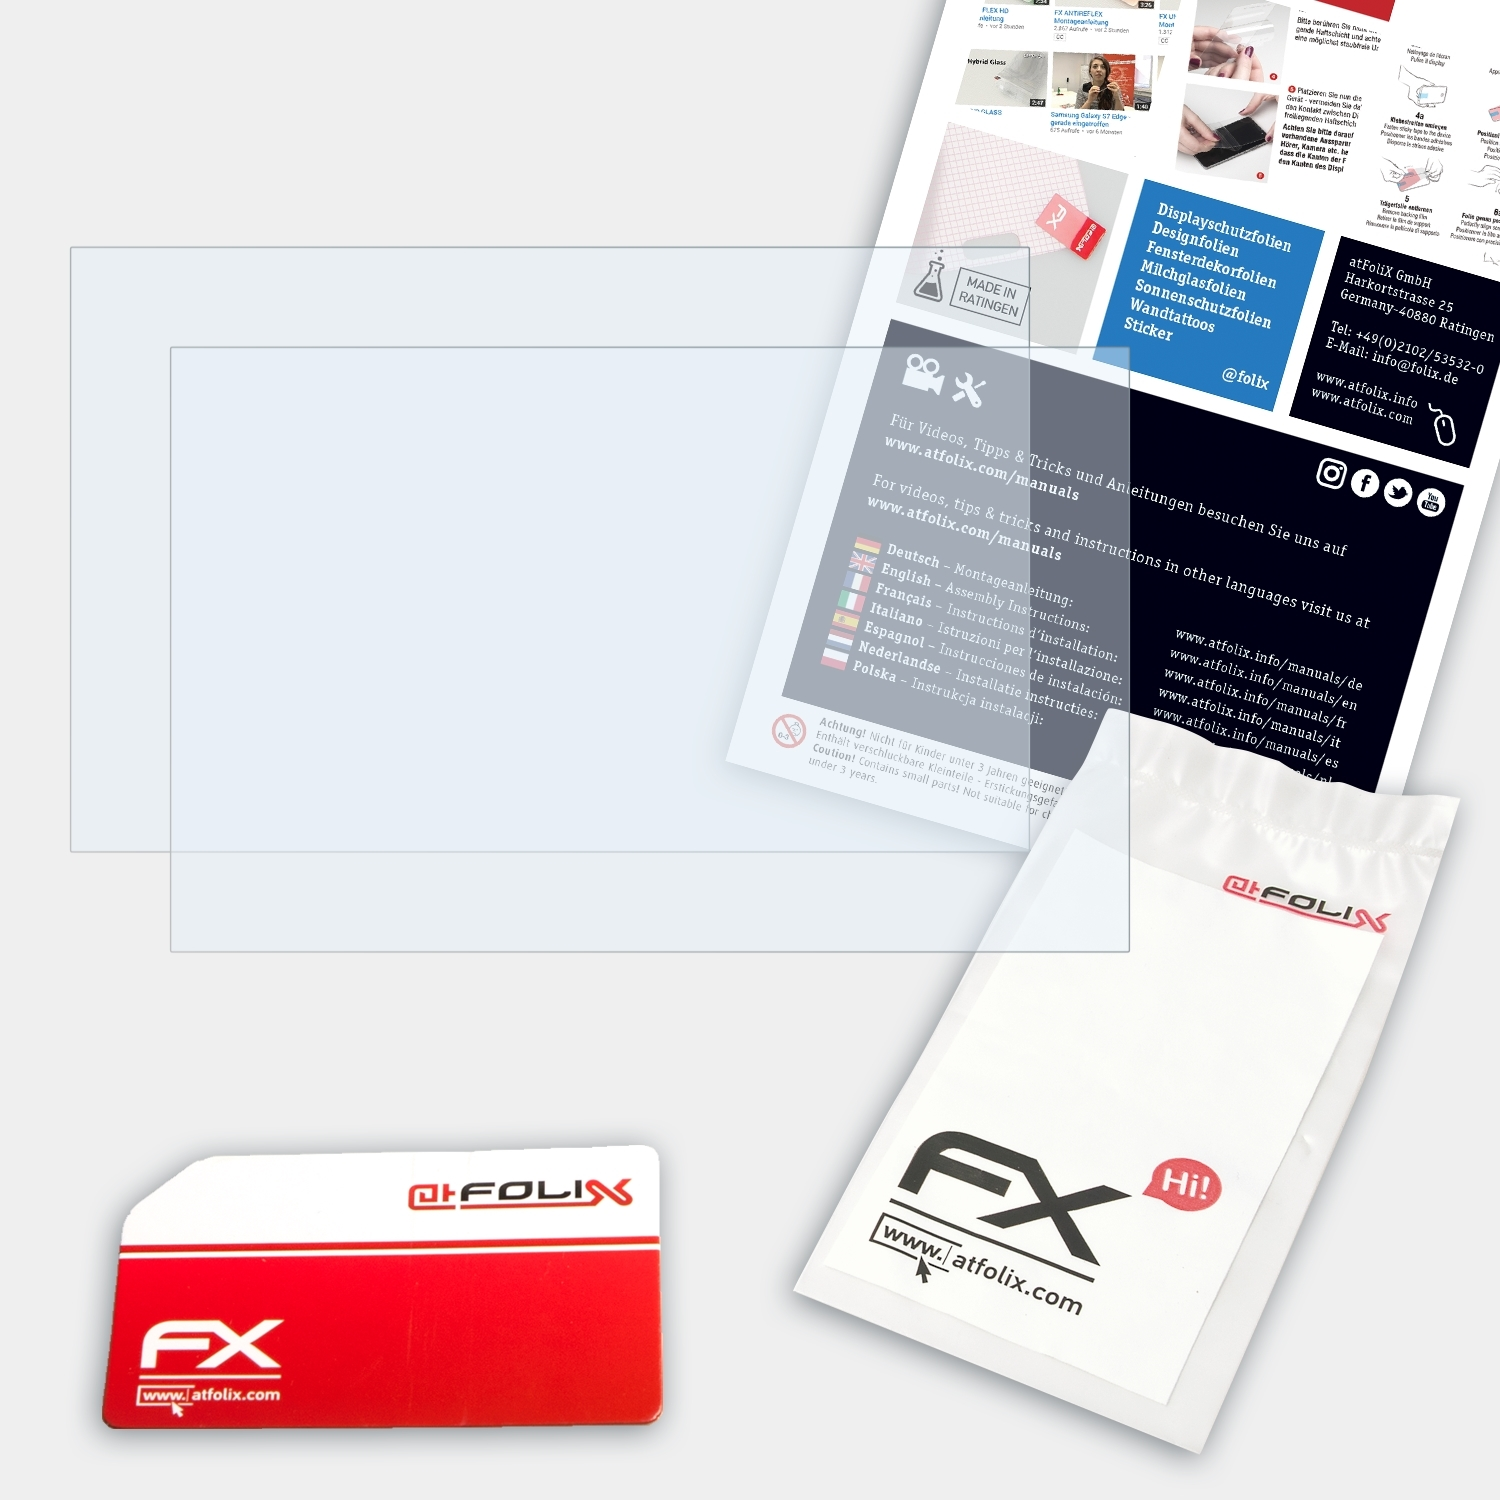 ATFOLIX Displayschutz(für Fujitsu 2x FX-Clear Lifebook T900)